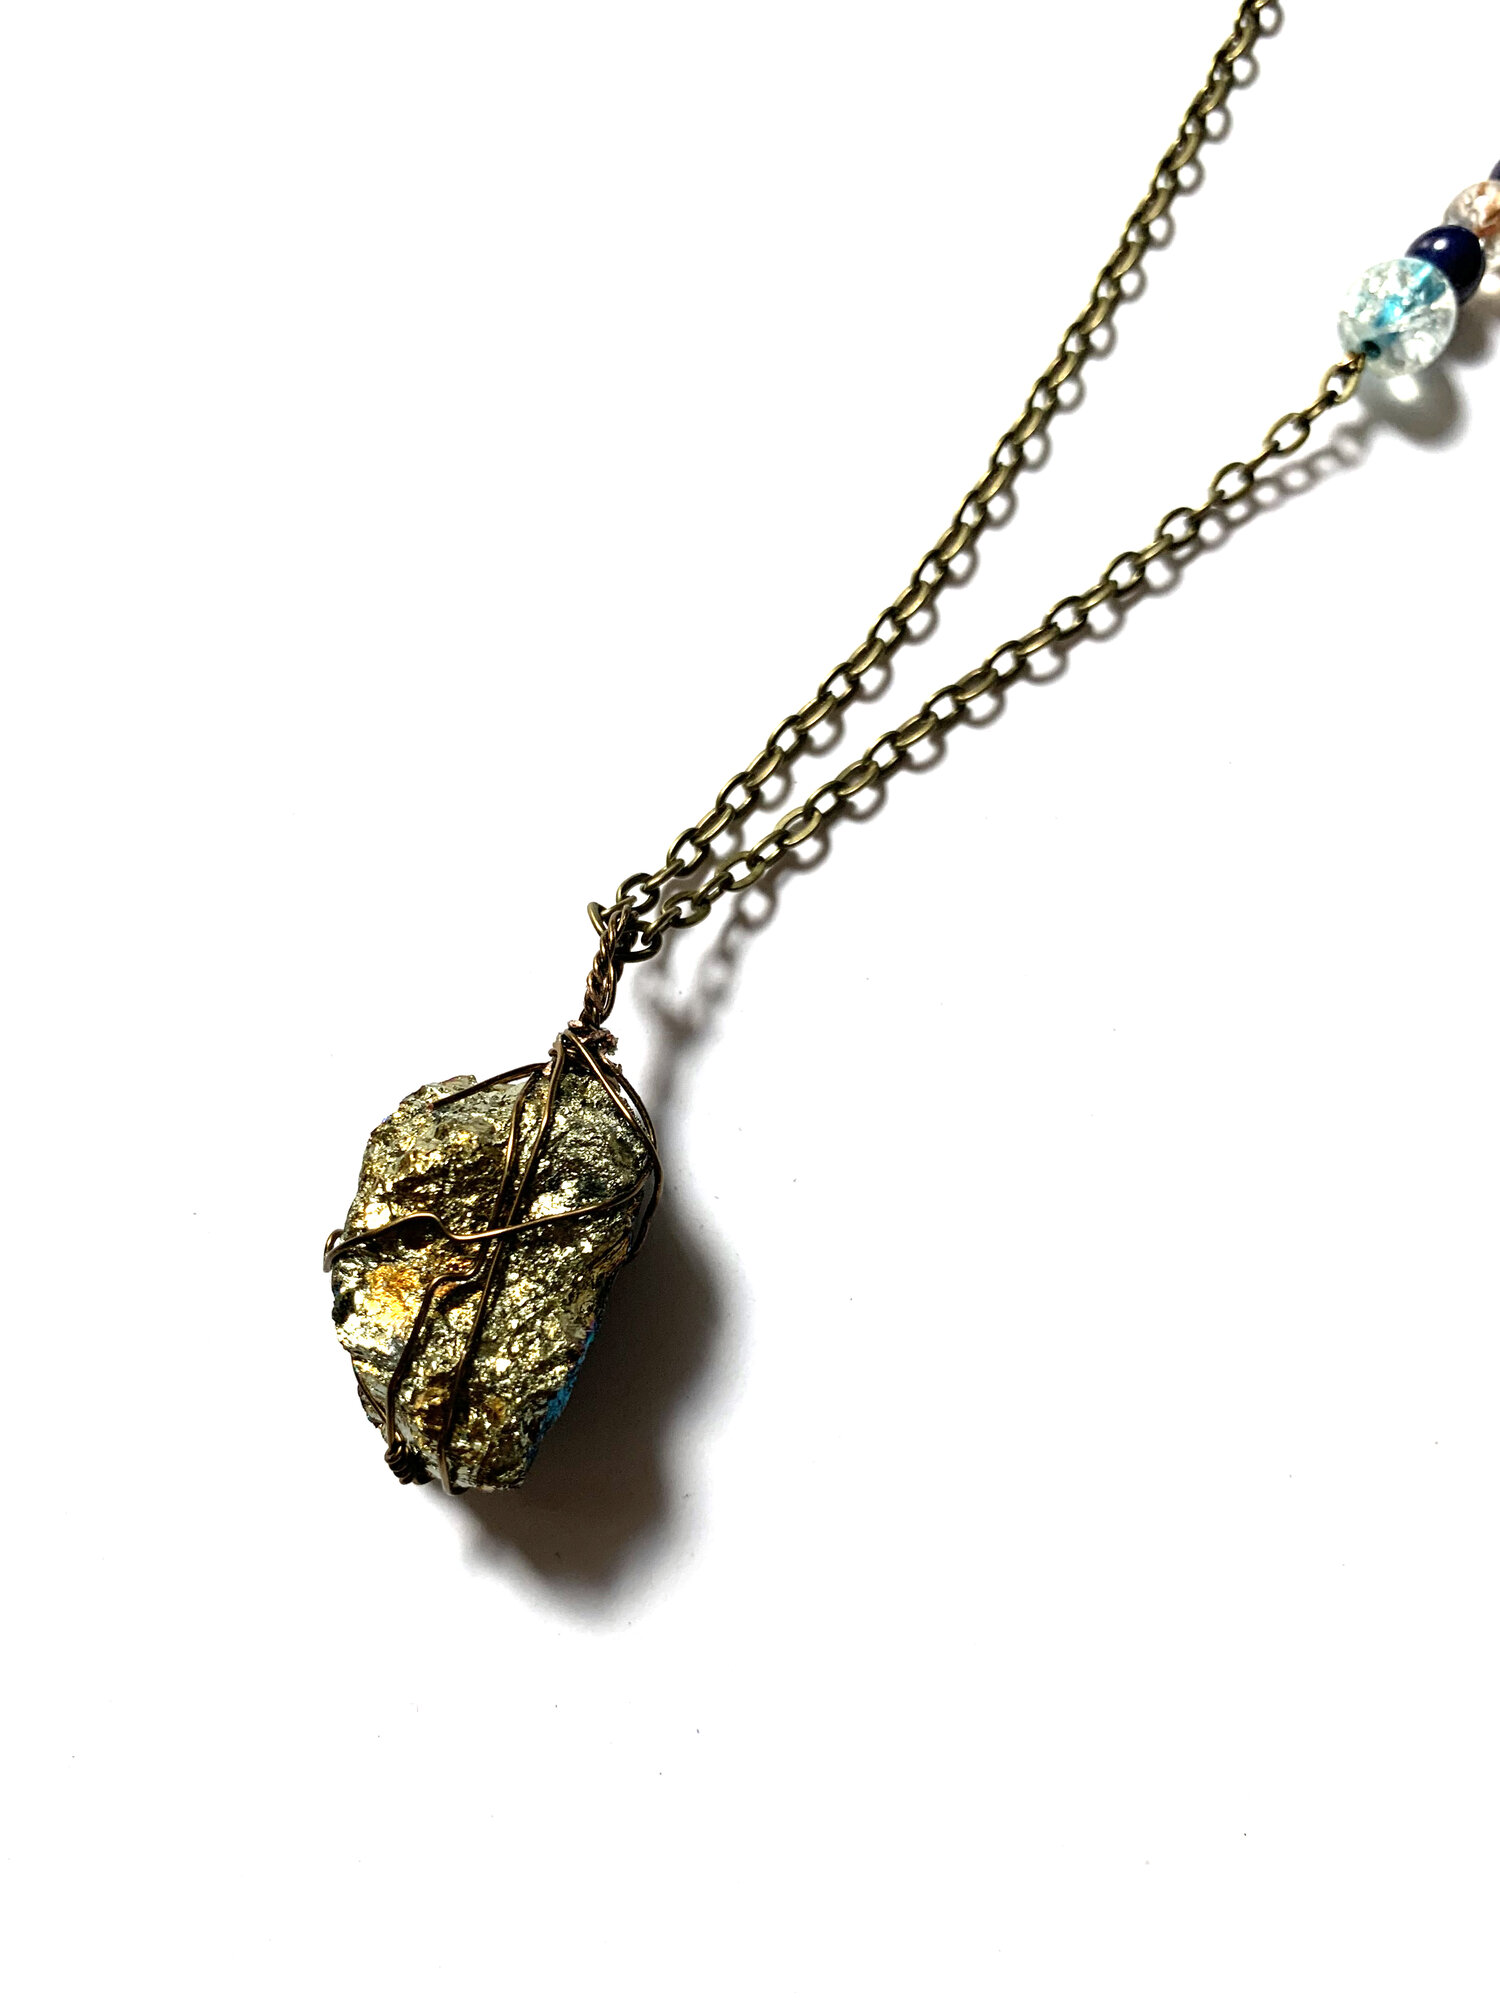 Peacock Ore Genuine Healing Stone Necklace - Joshua Tree Gemstones handmade  necklace - Handmade Reiki Gemstone Necklace - — Joshua Tree Rock & Lotus